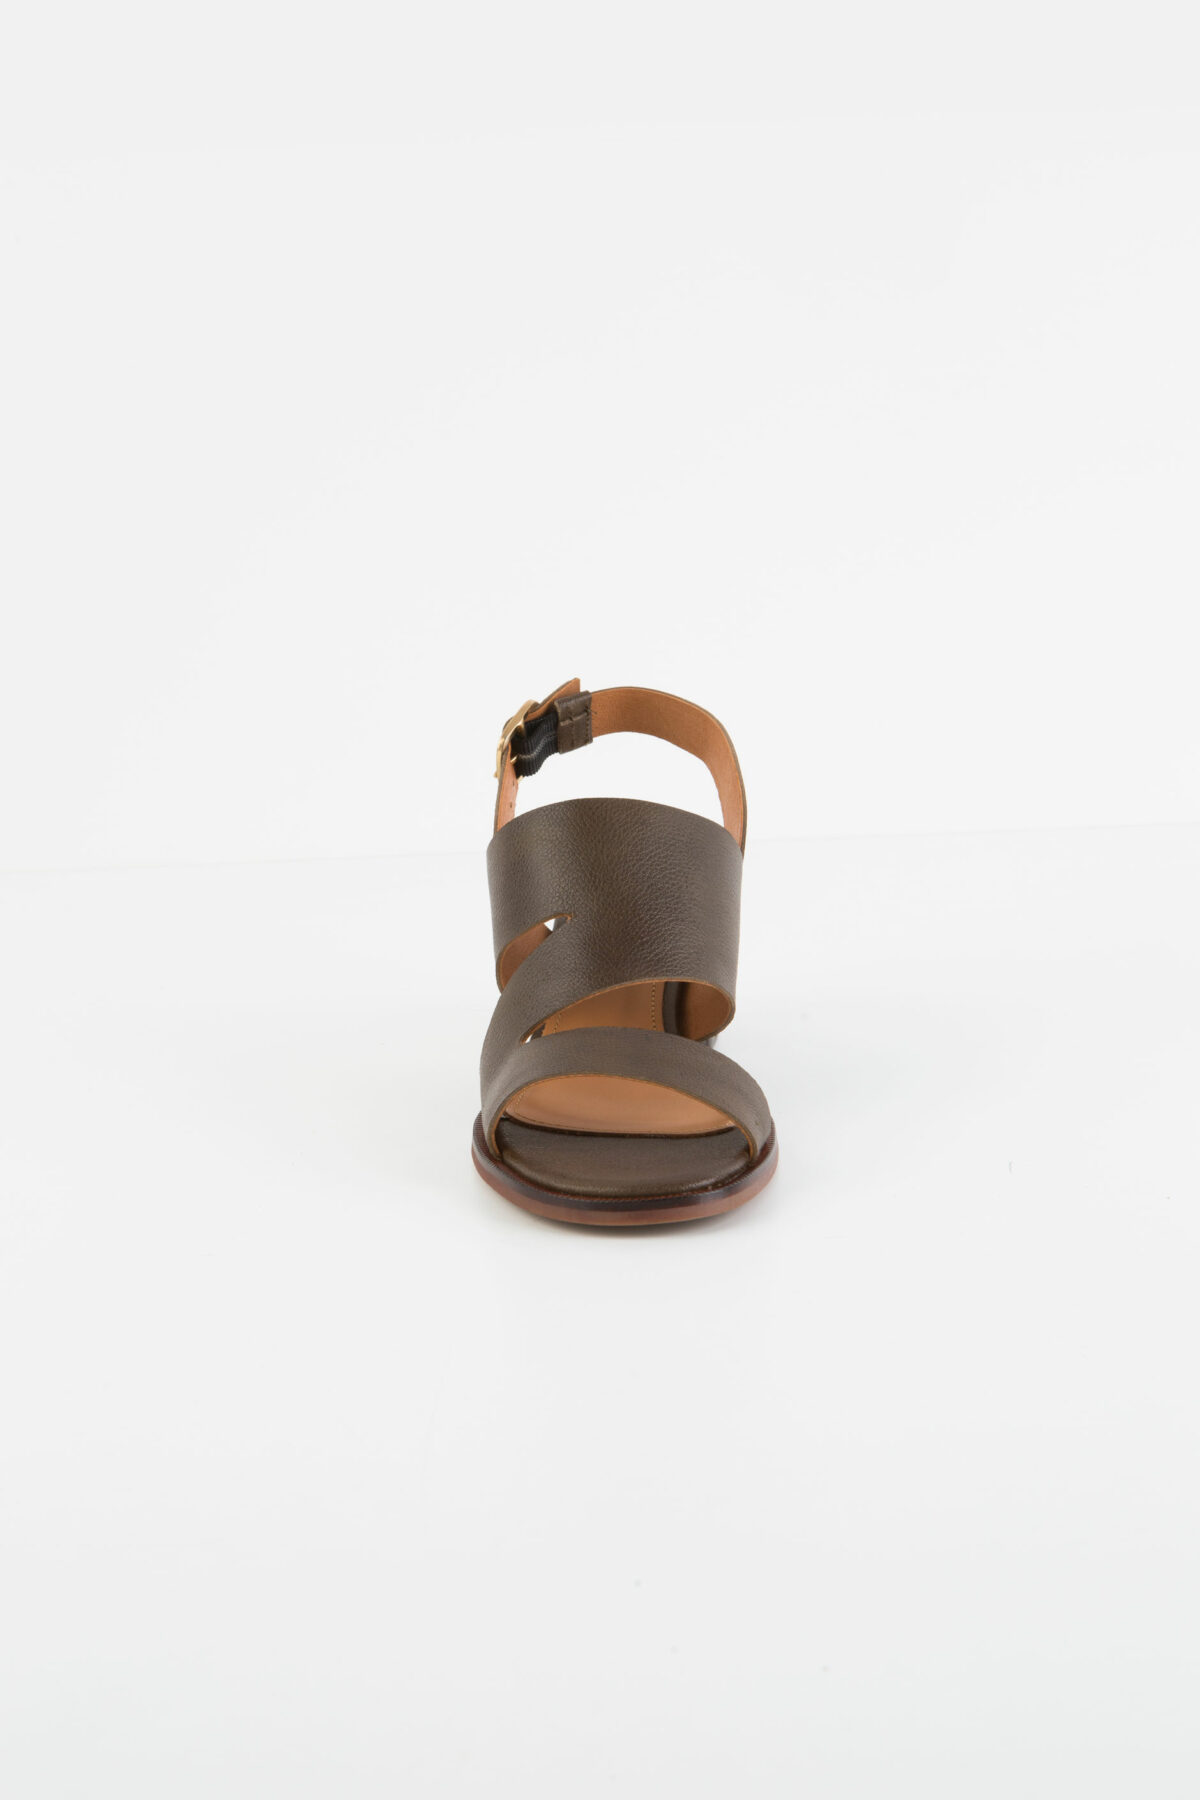 britta-olive-leather-sandals-heels-chunky-anonymus-copenhagen-matchboxathens